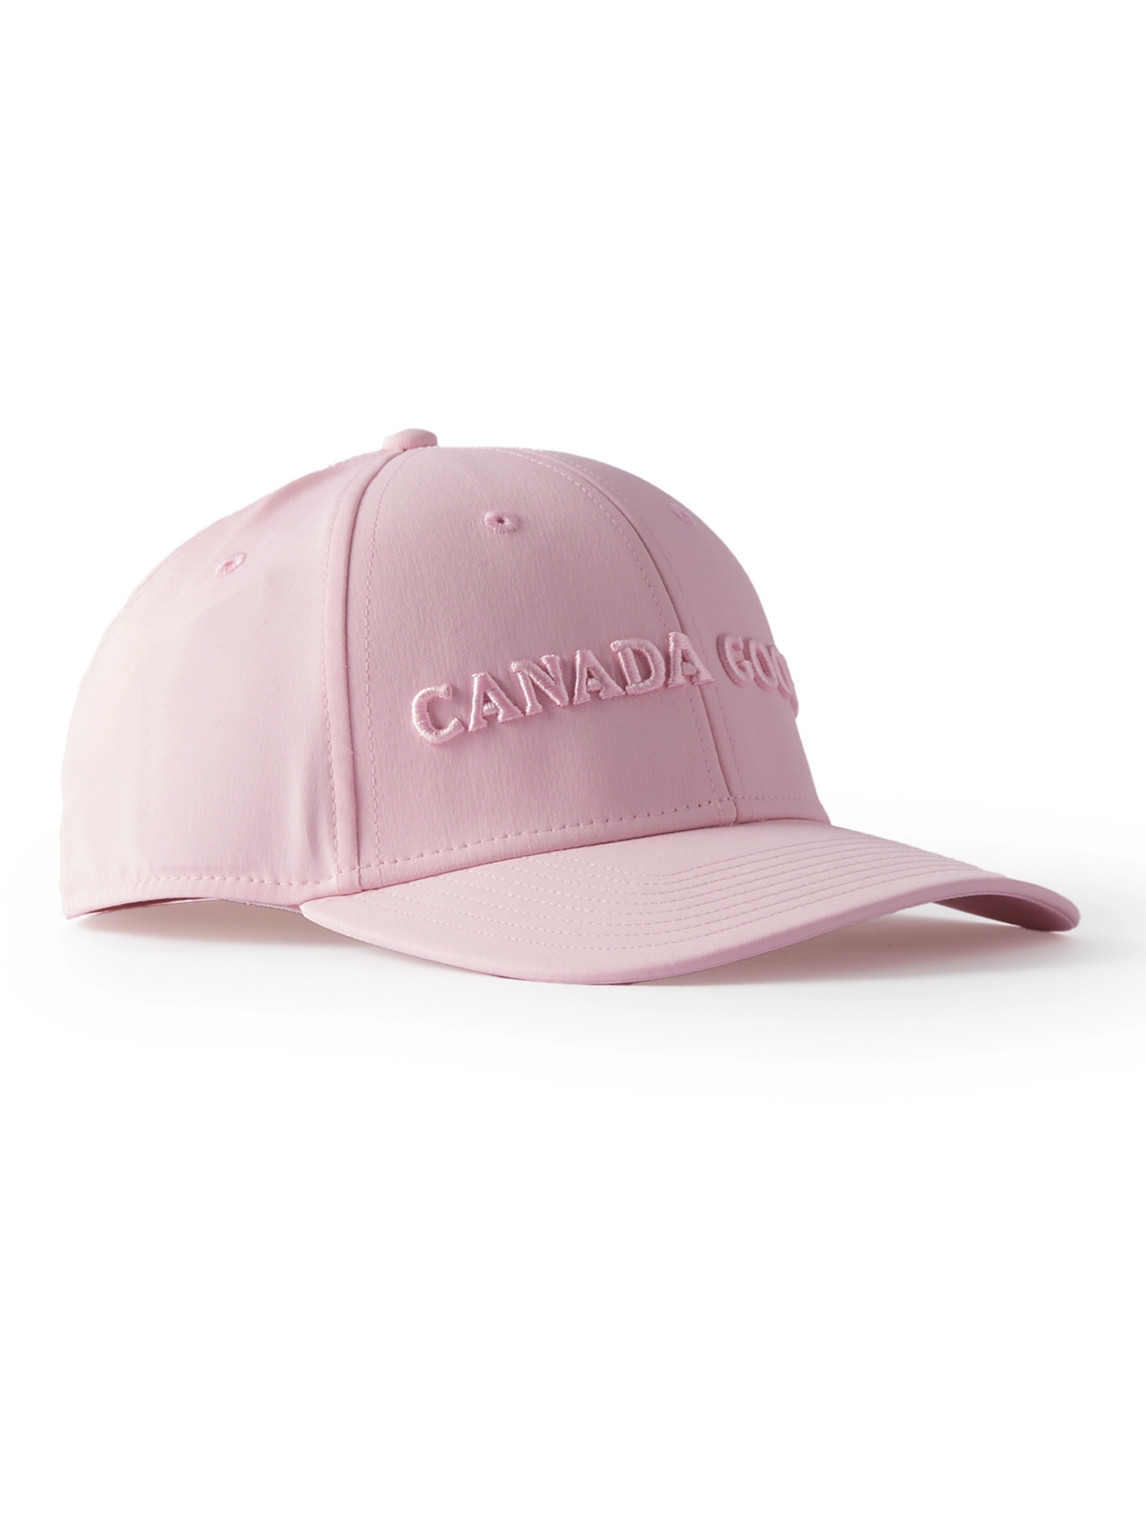 Canada Goose - Logo-Embroidered Cotton-Blend Canvas Baseball Cap - Men - Pink - M/L von Canada Goose